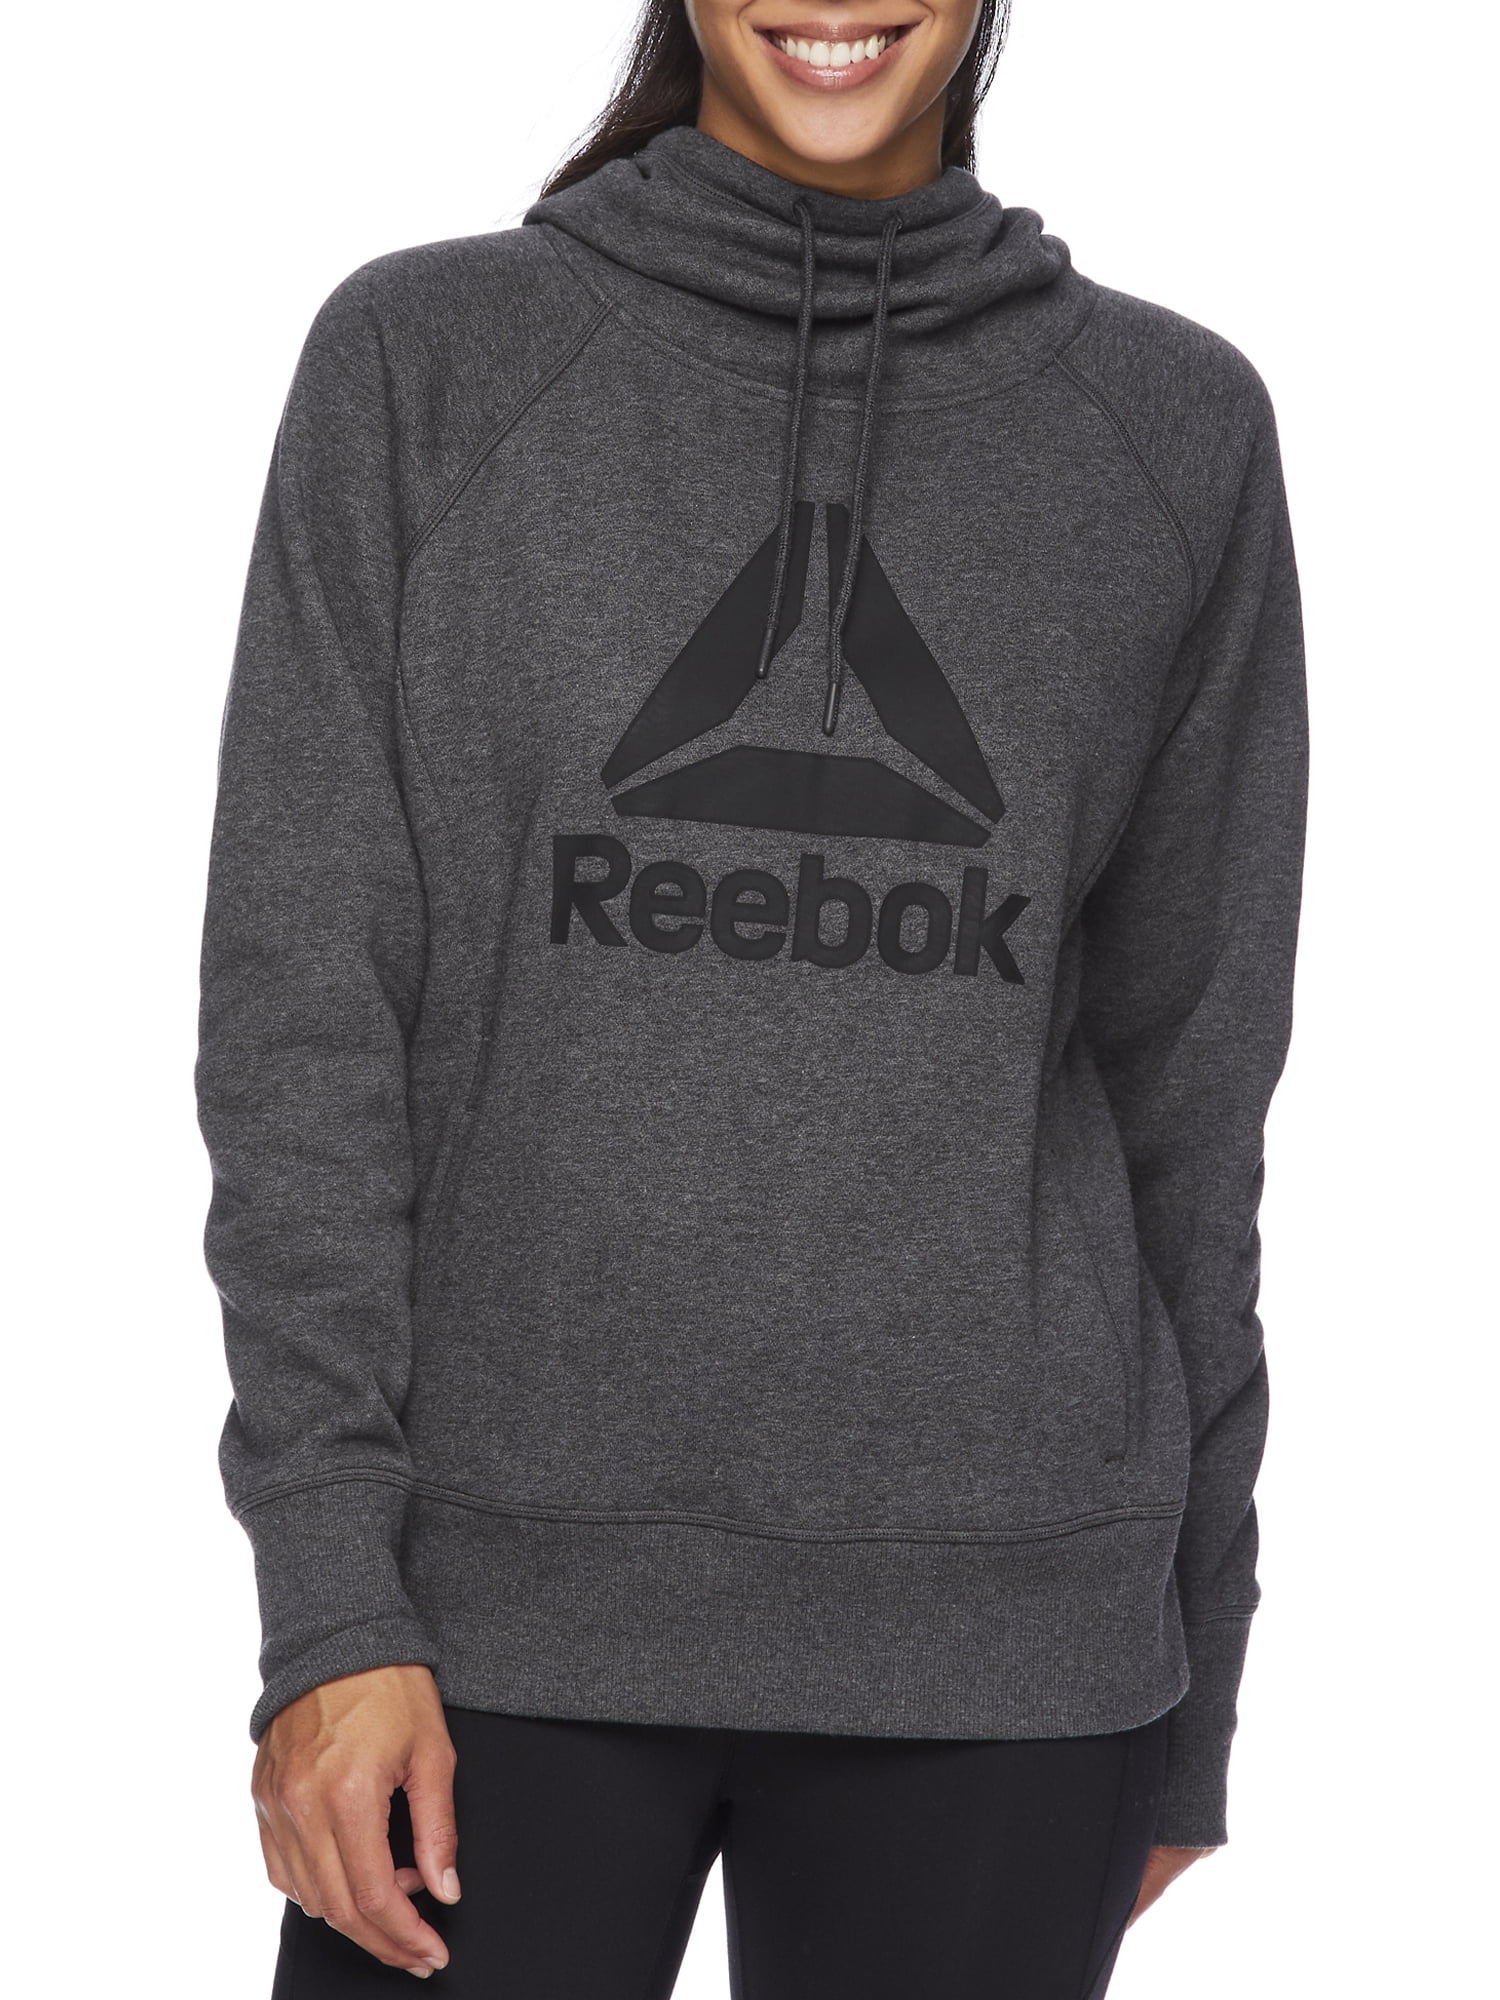 Buy > reebok sweatshirt womens > in stock